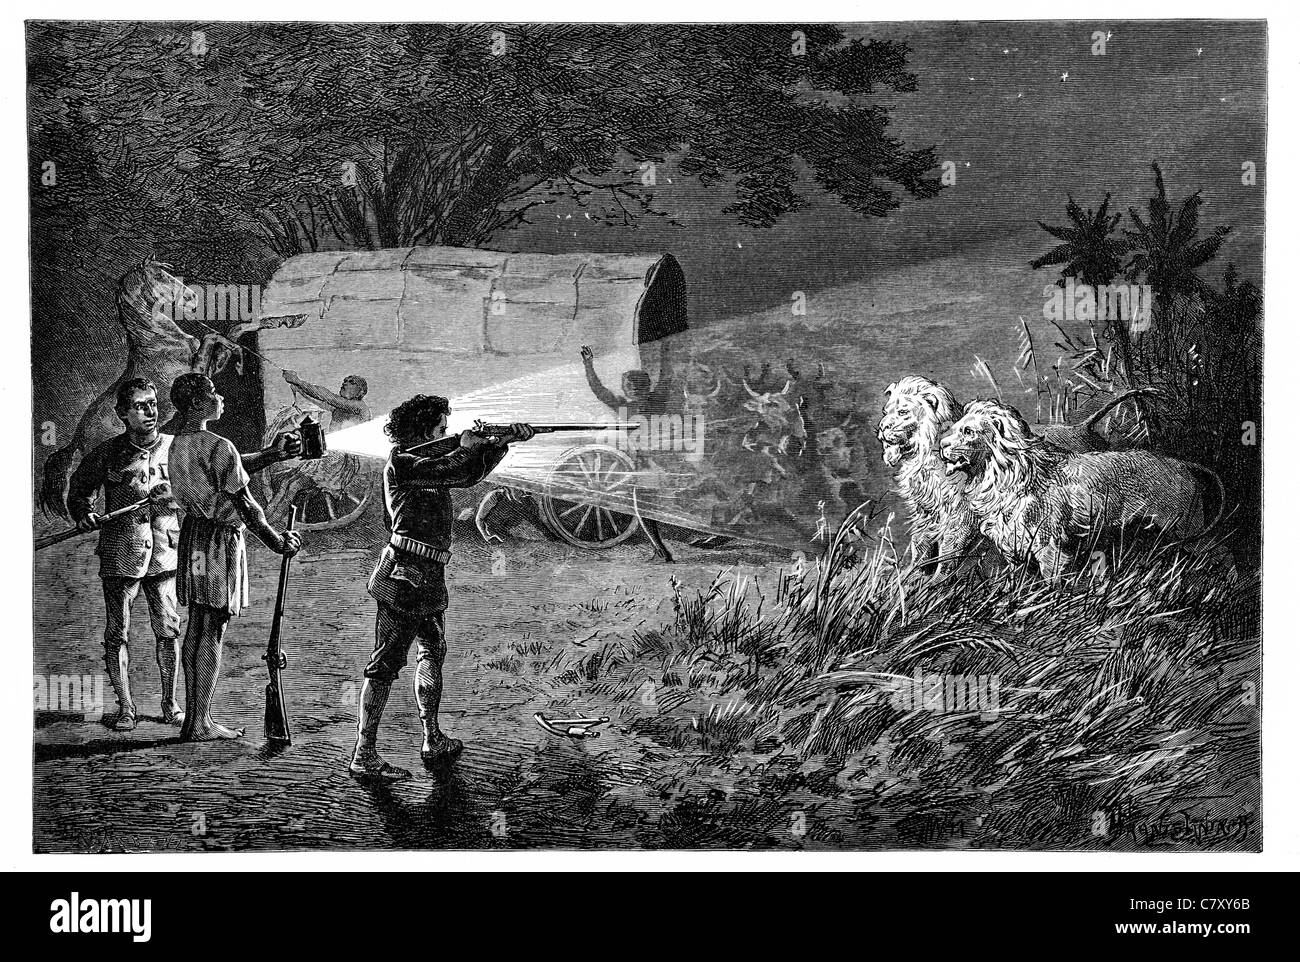 Dreharbeiten Big Game Jagd Jagd gejagt Afrika Big Five Löwe Löwen Tiger indischen Subkontinent Feuerwaffe Schrotflinten Gewehrkugel calibe Stockfoto